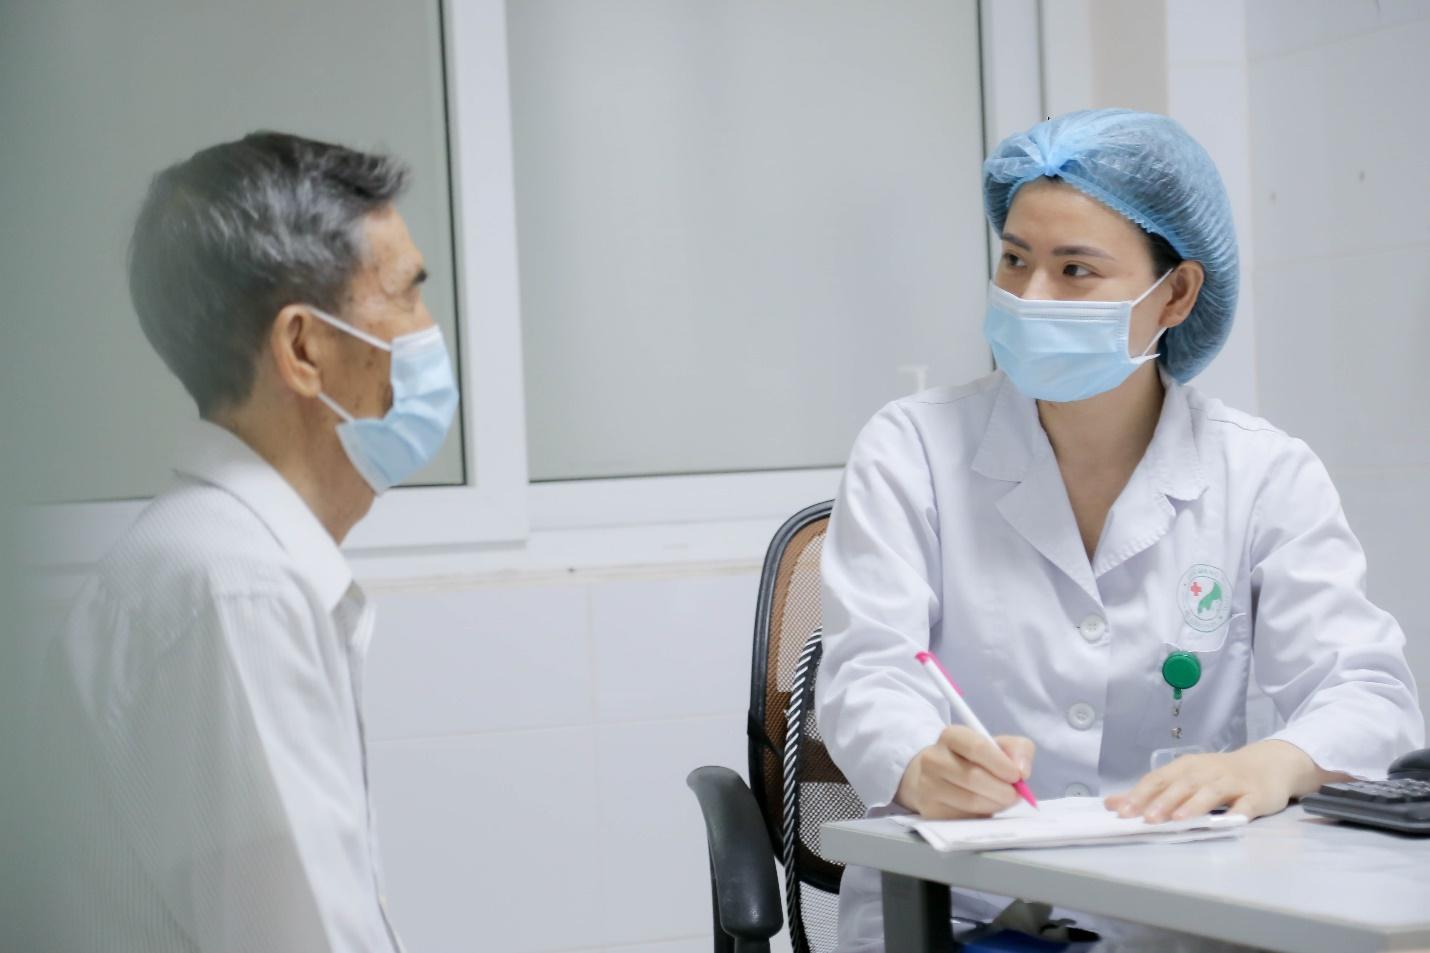 Latest procedures for registration for practice of medicine in Vietnam